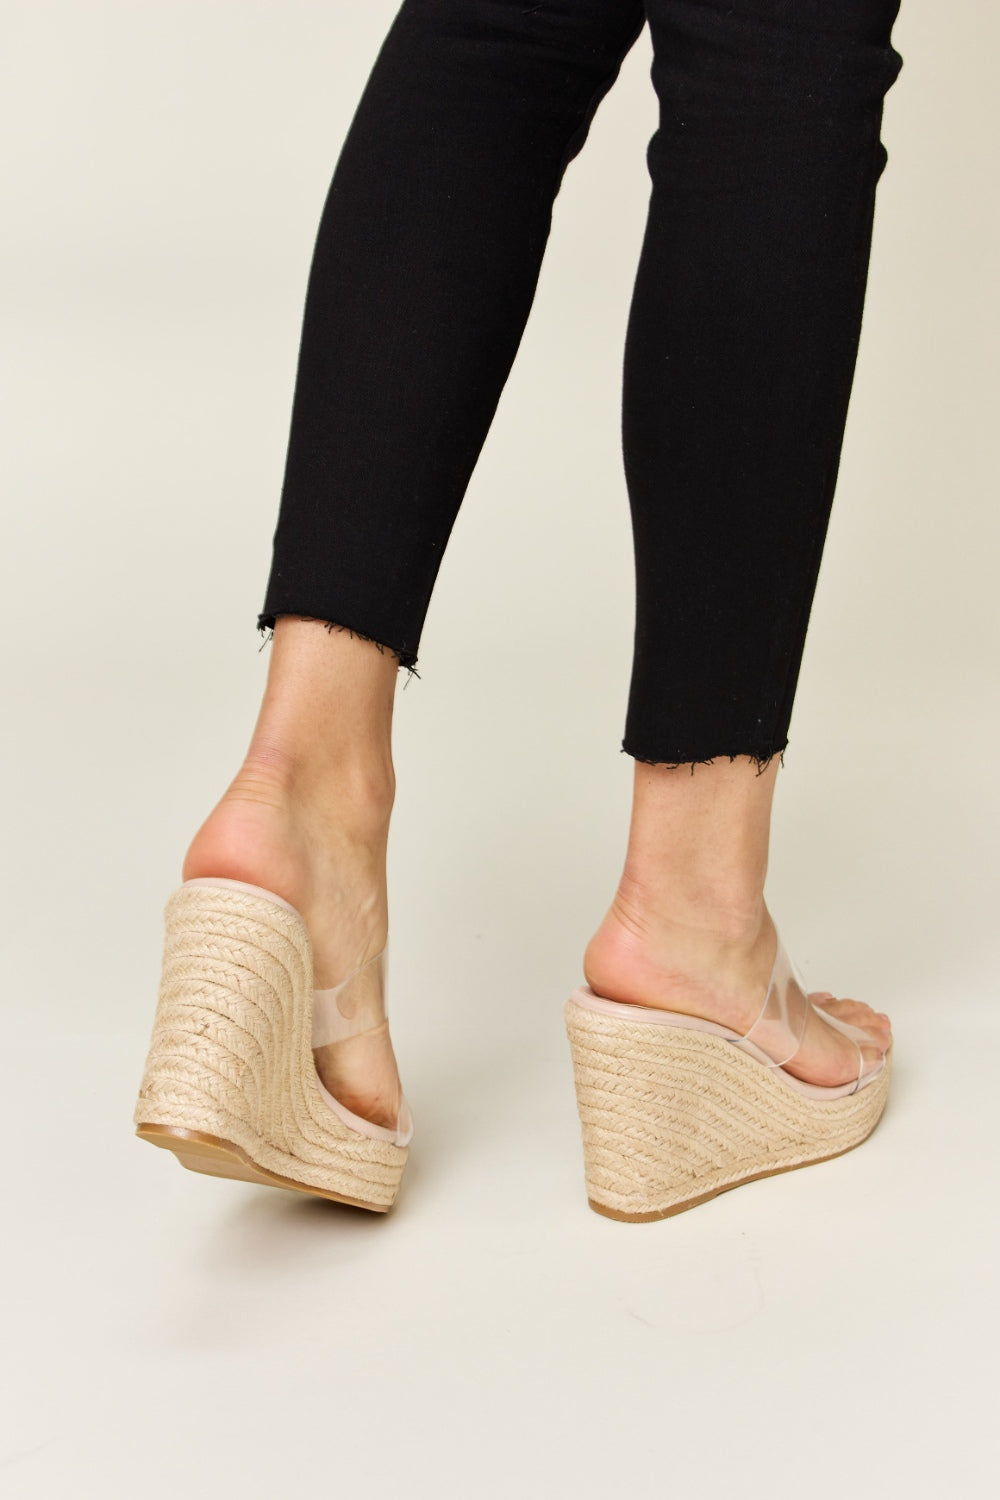 Forever Link Clear Strap Espadrille Nude Color Platform Wedge Tall Sandals